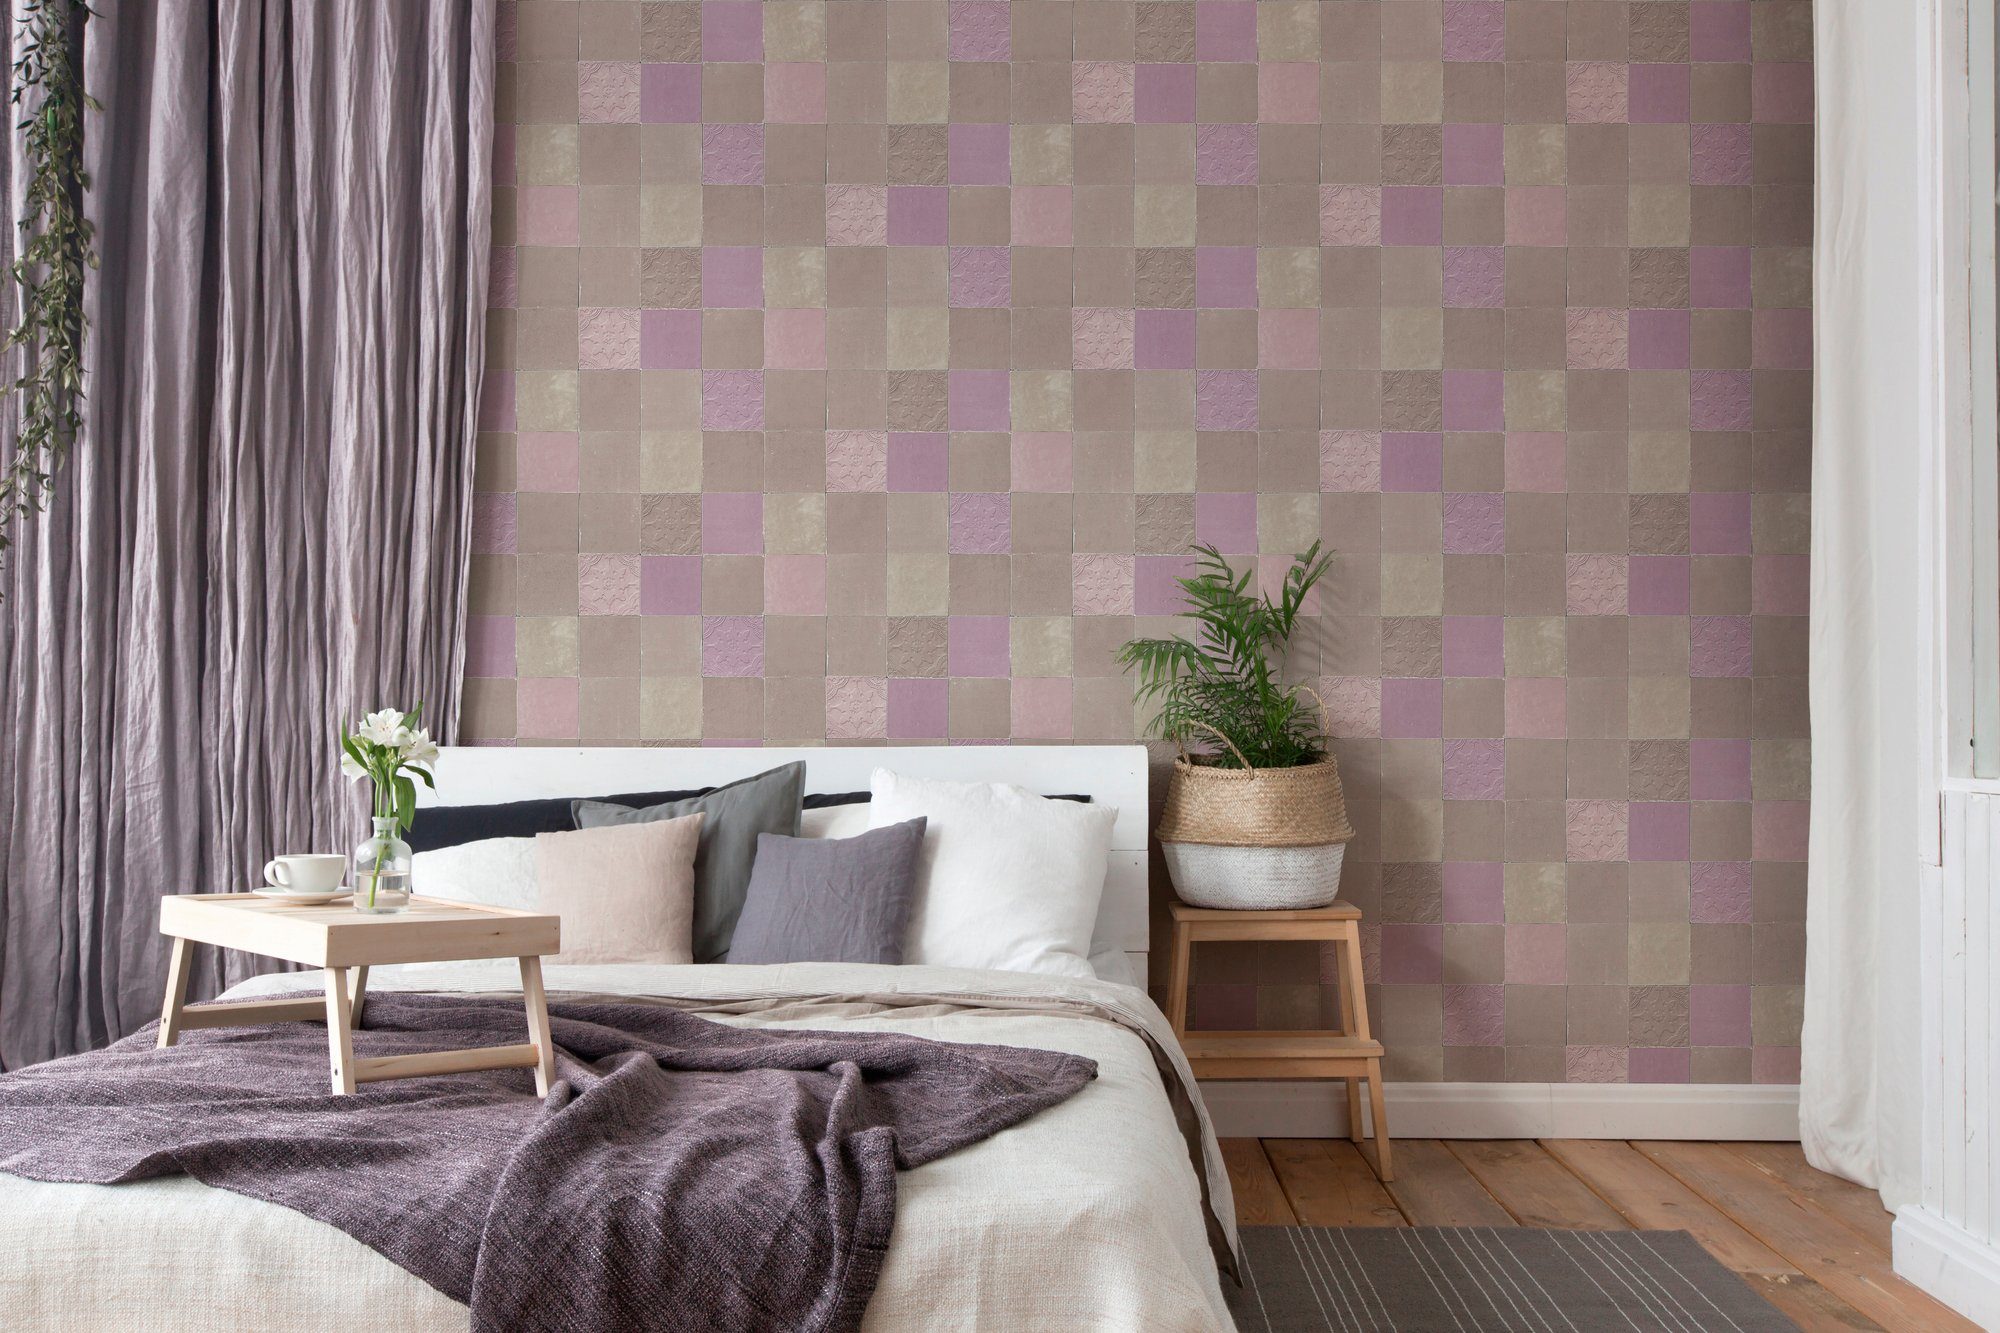 Fliesen New Fliesen in braun/pink Walls Vliestapete walls Home Tapete Finca living Optik, gemustert,